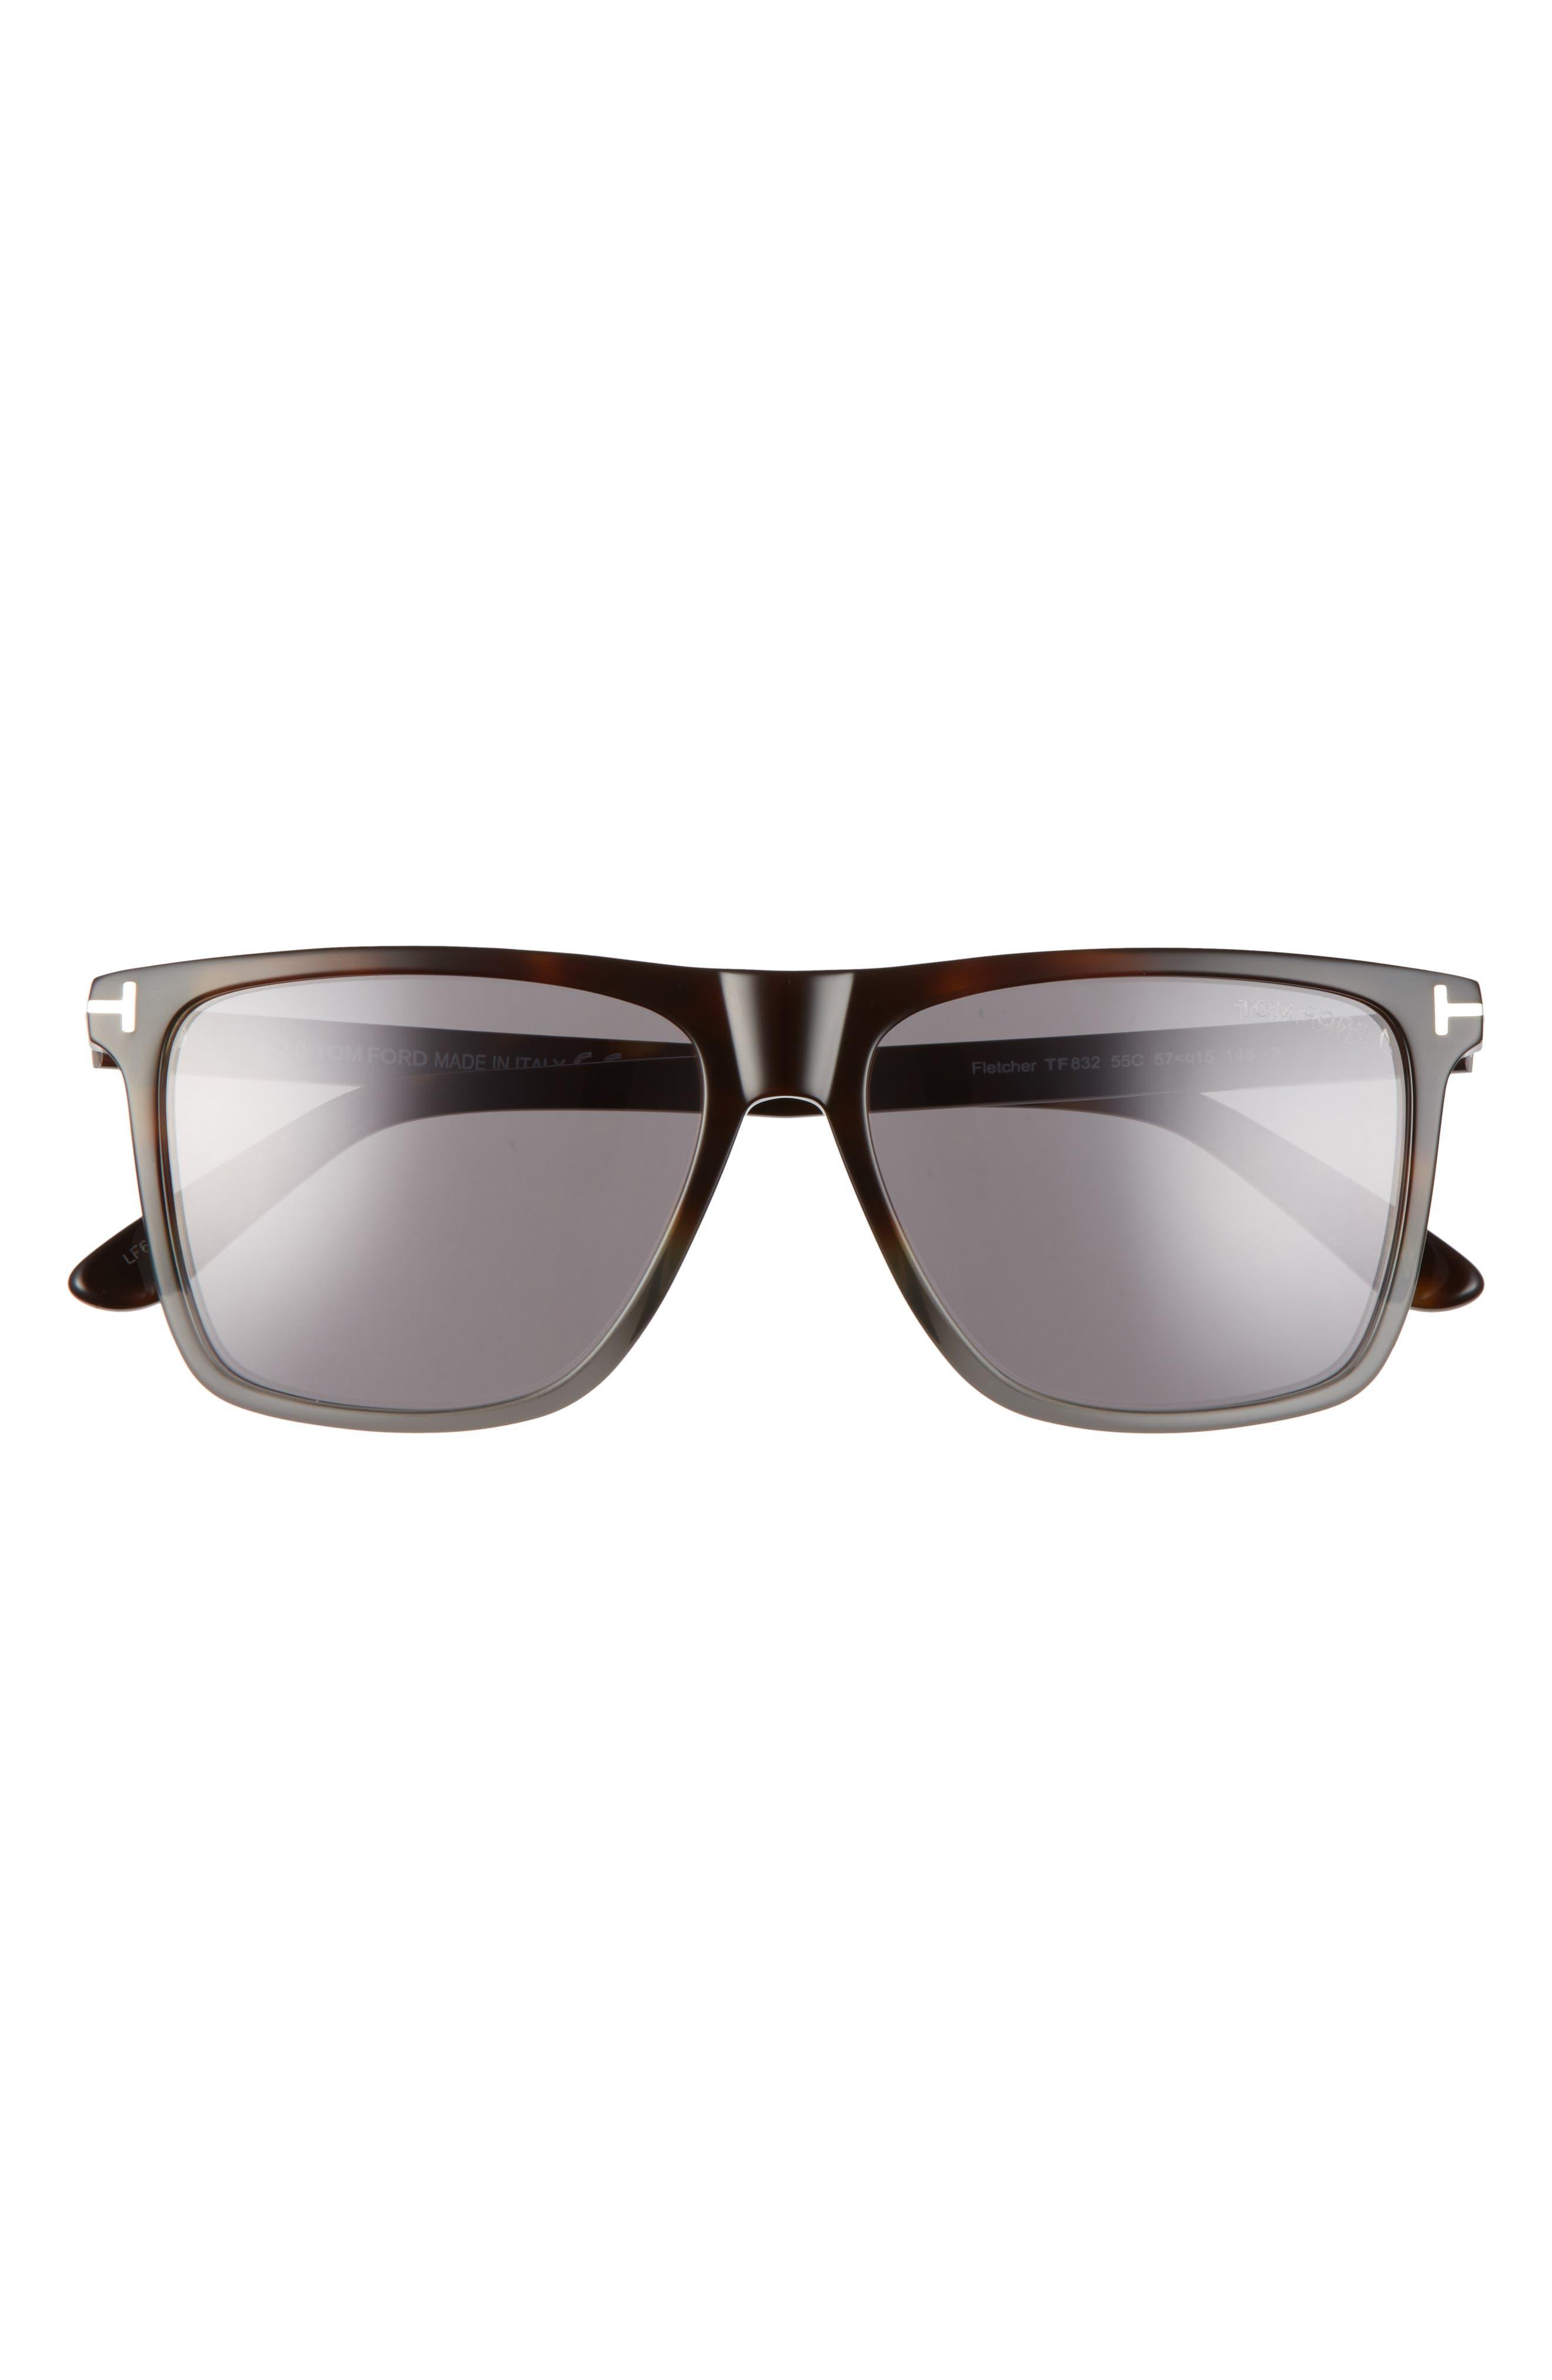 Tom Ford Men's Polarized River Square Sunglasses, 57mm